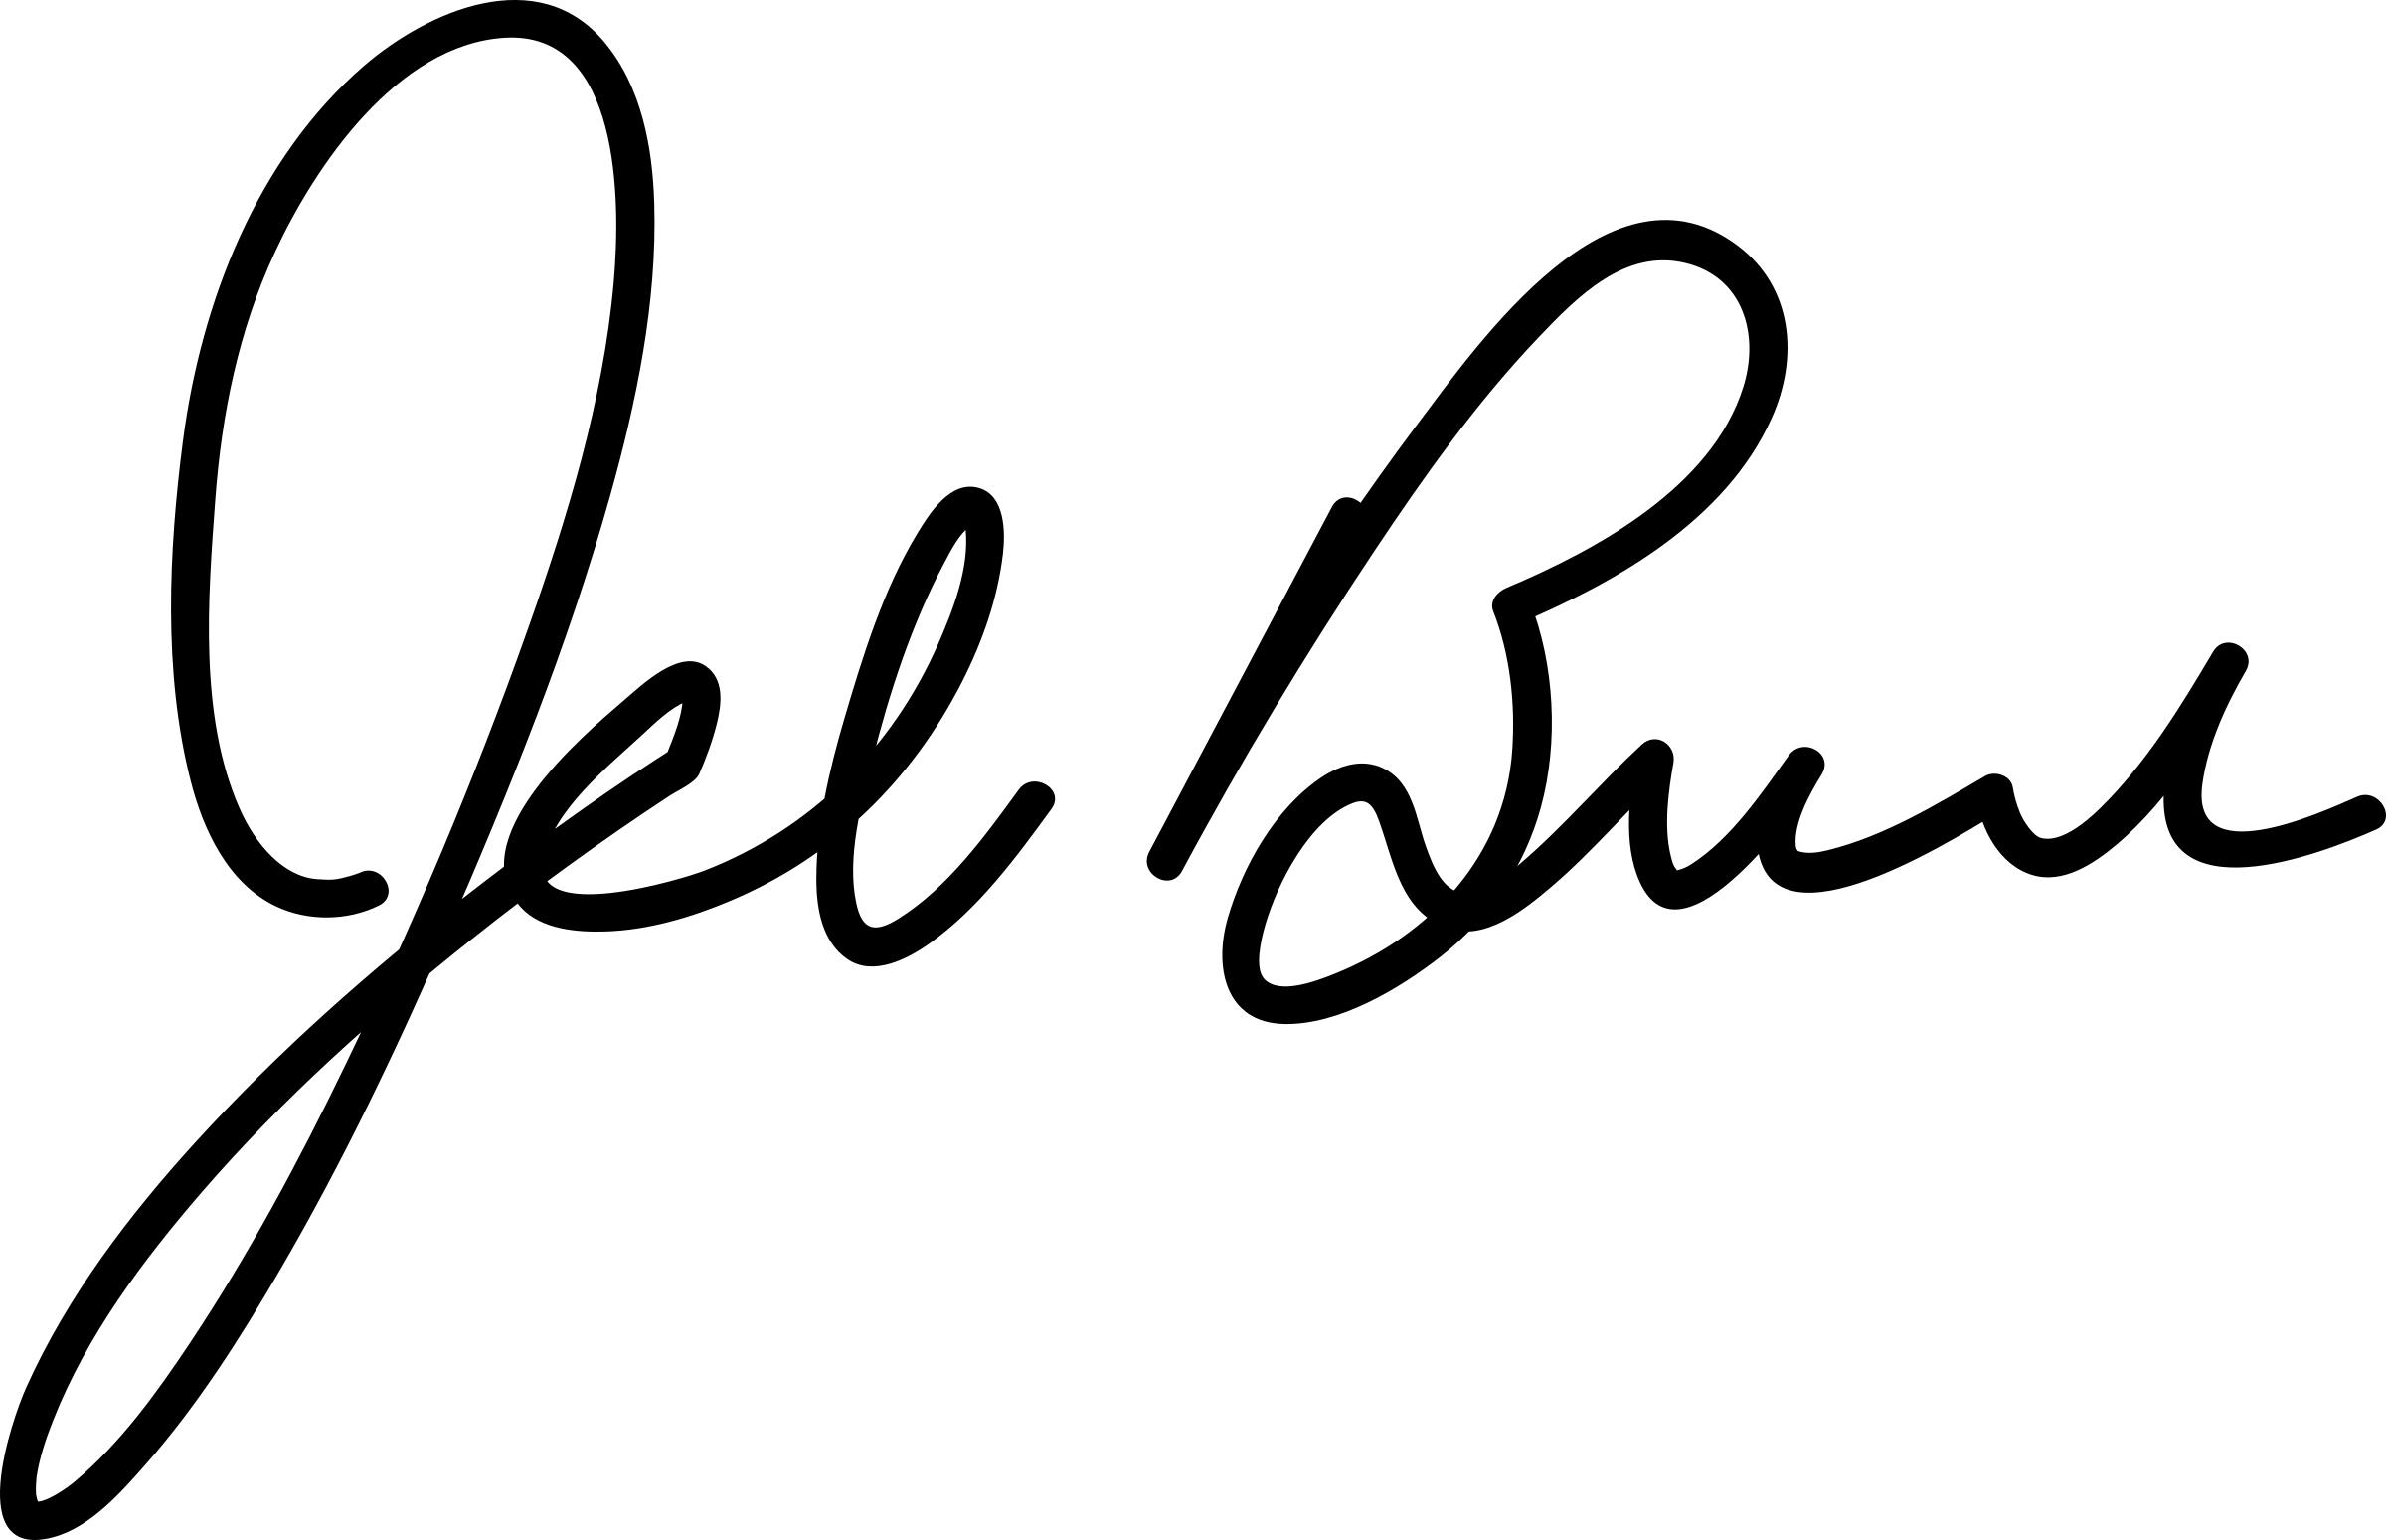 Signature of Jeb Bush png